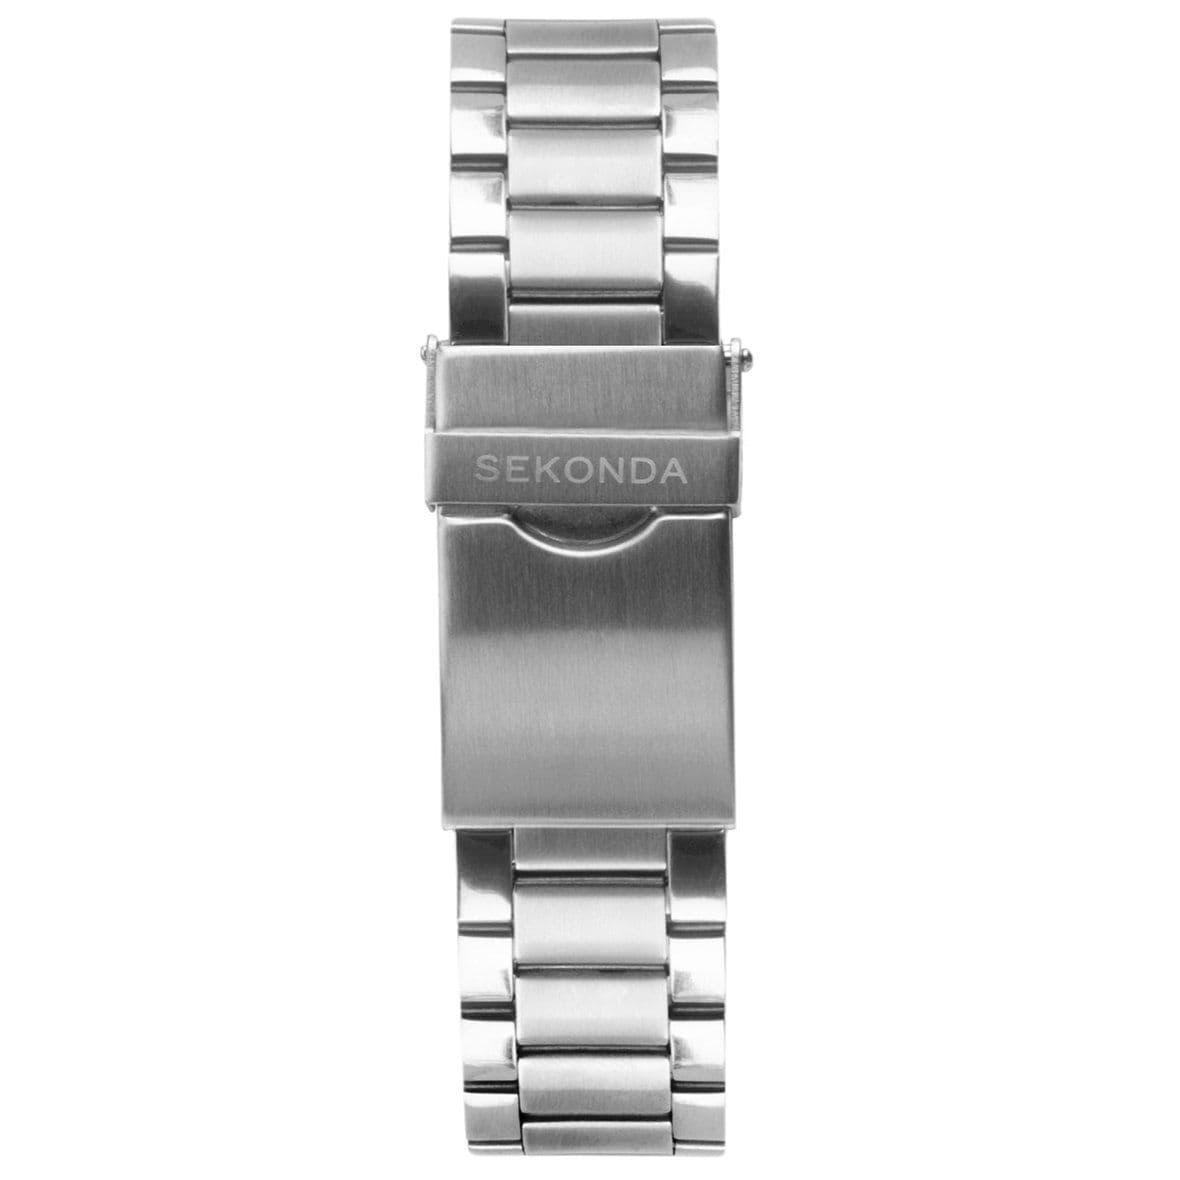 1640 Sekonda Men's Round  Blue Stainless Steel Bracelet Watch With Date Feature